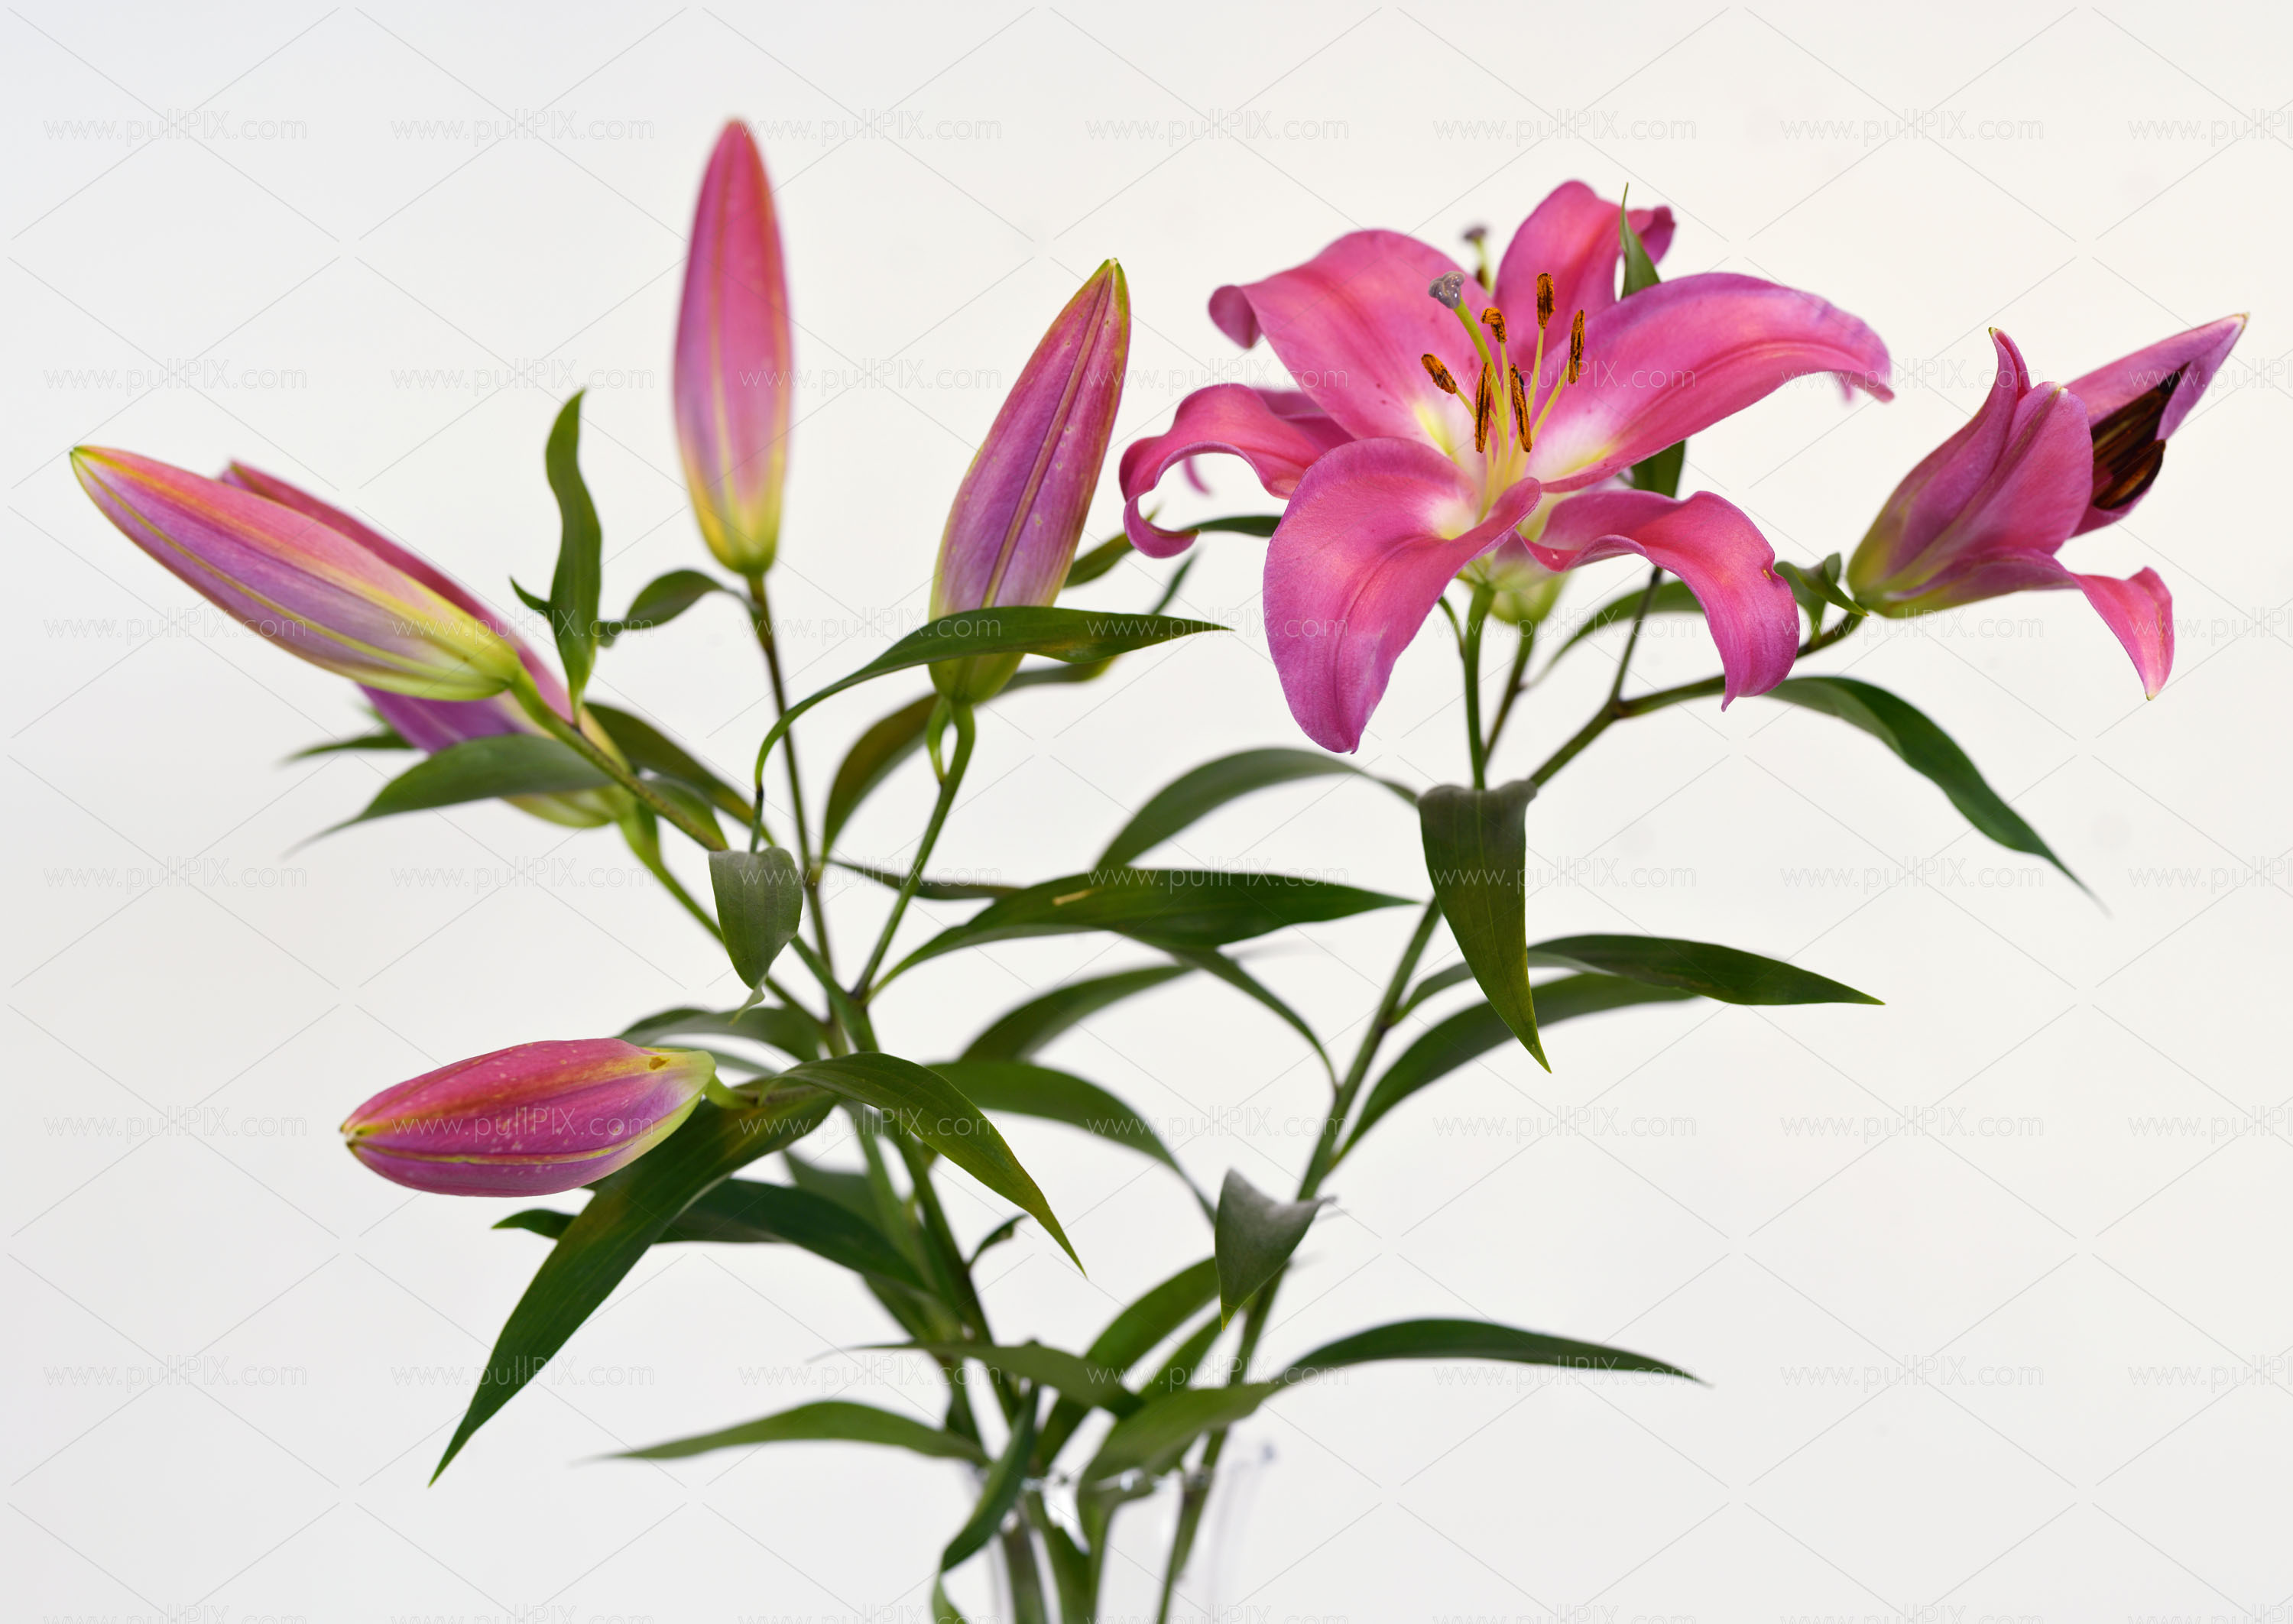 Preview Lilien in Vase.jpg